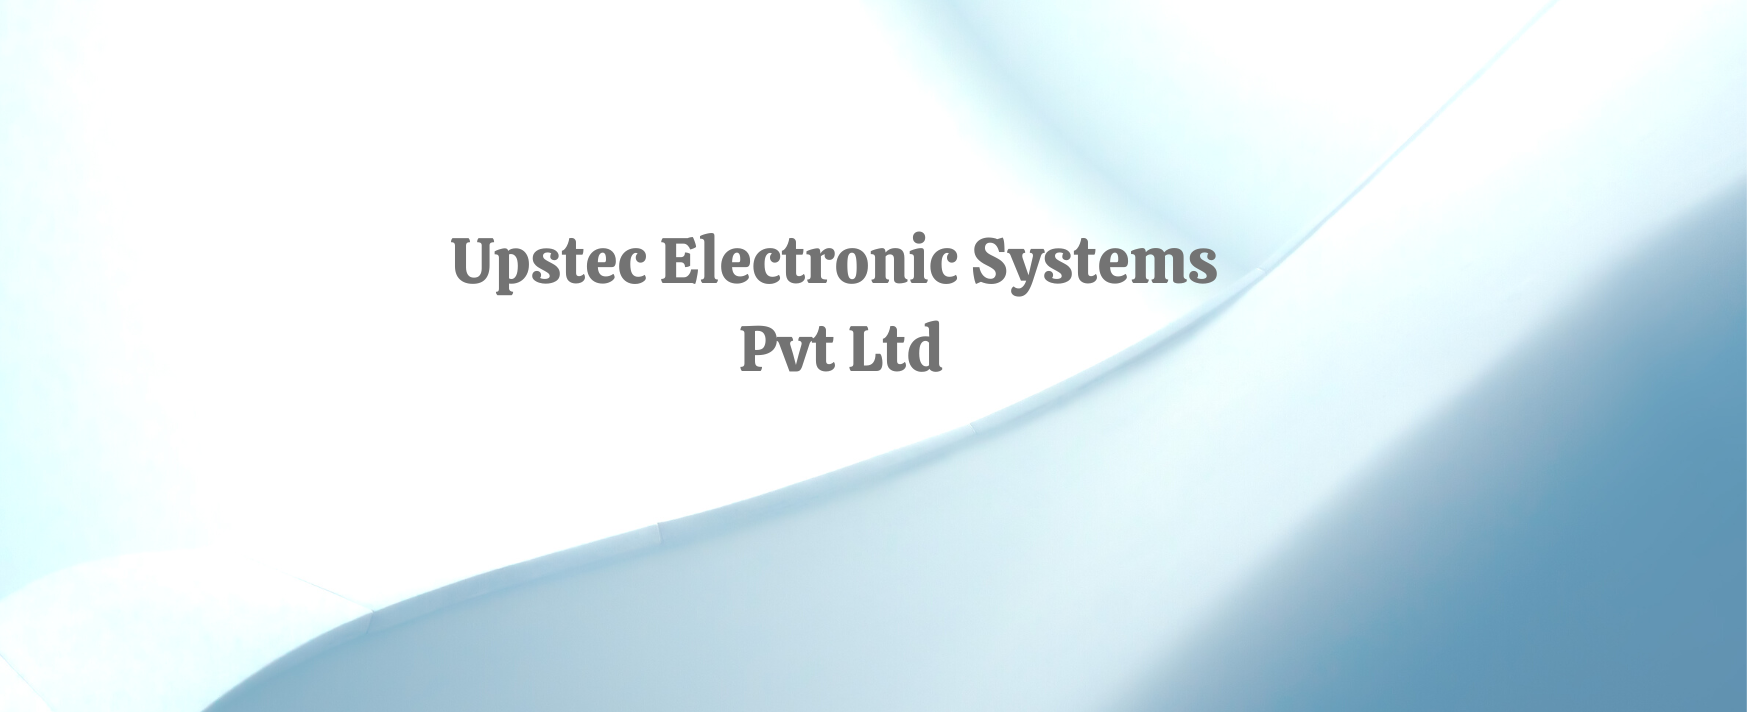 Upstec Electronic Systems Pvt Ltd